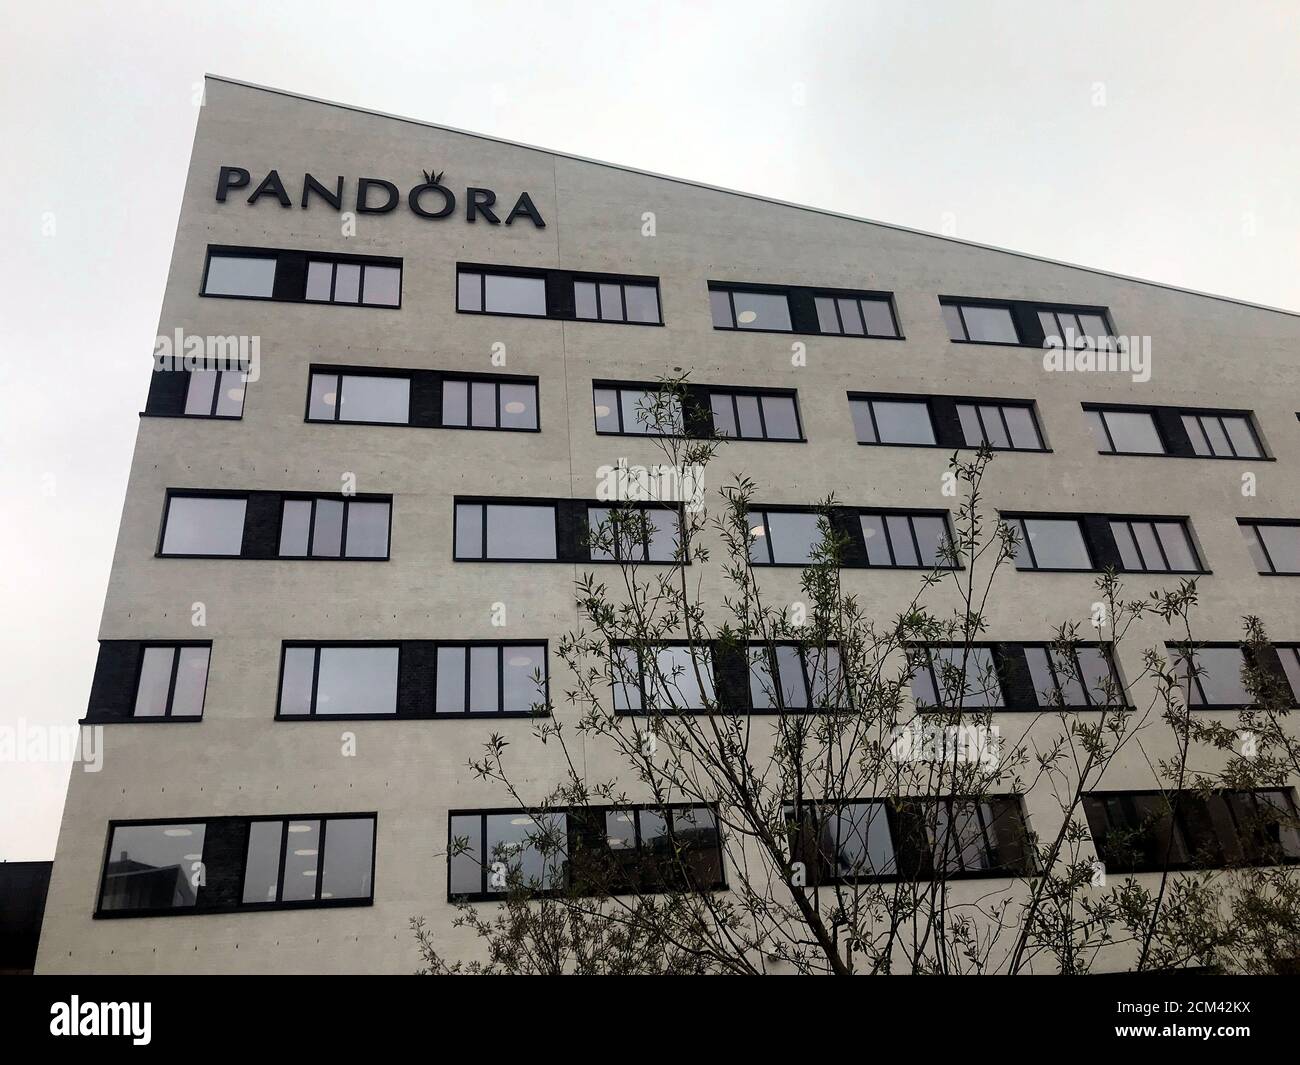 Pandora copenhagen hi-res stock photography and images - Alamy